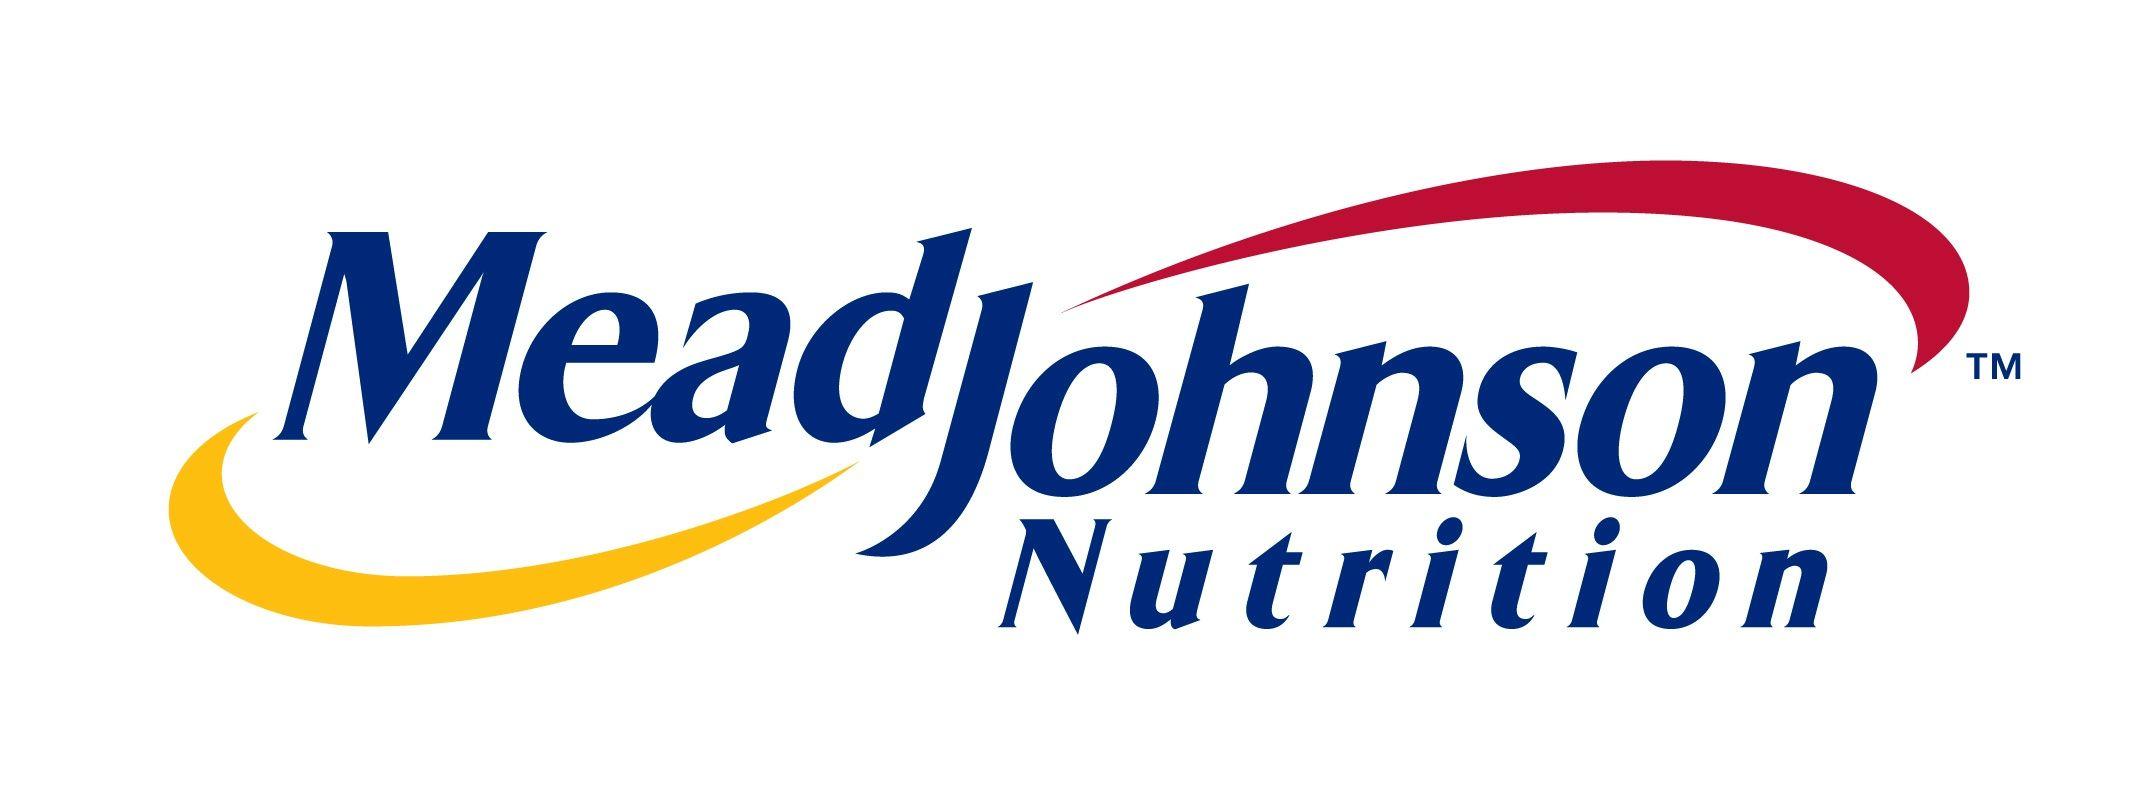 Hohnson Logo - Mead Johnson logo - NIZO